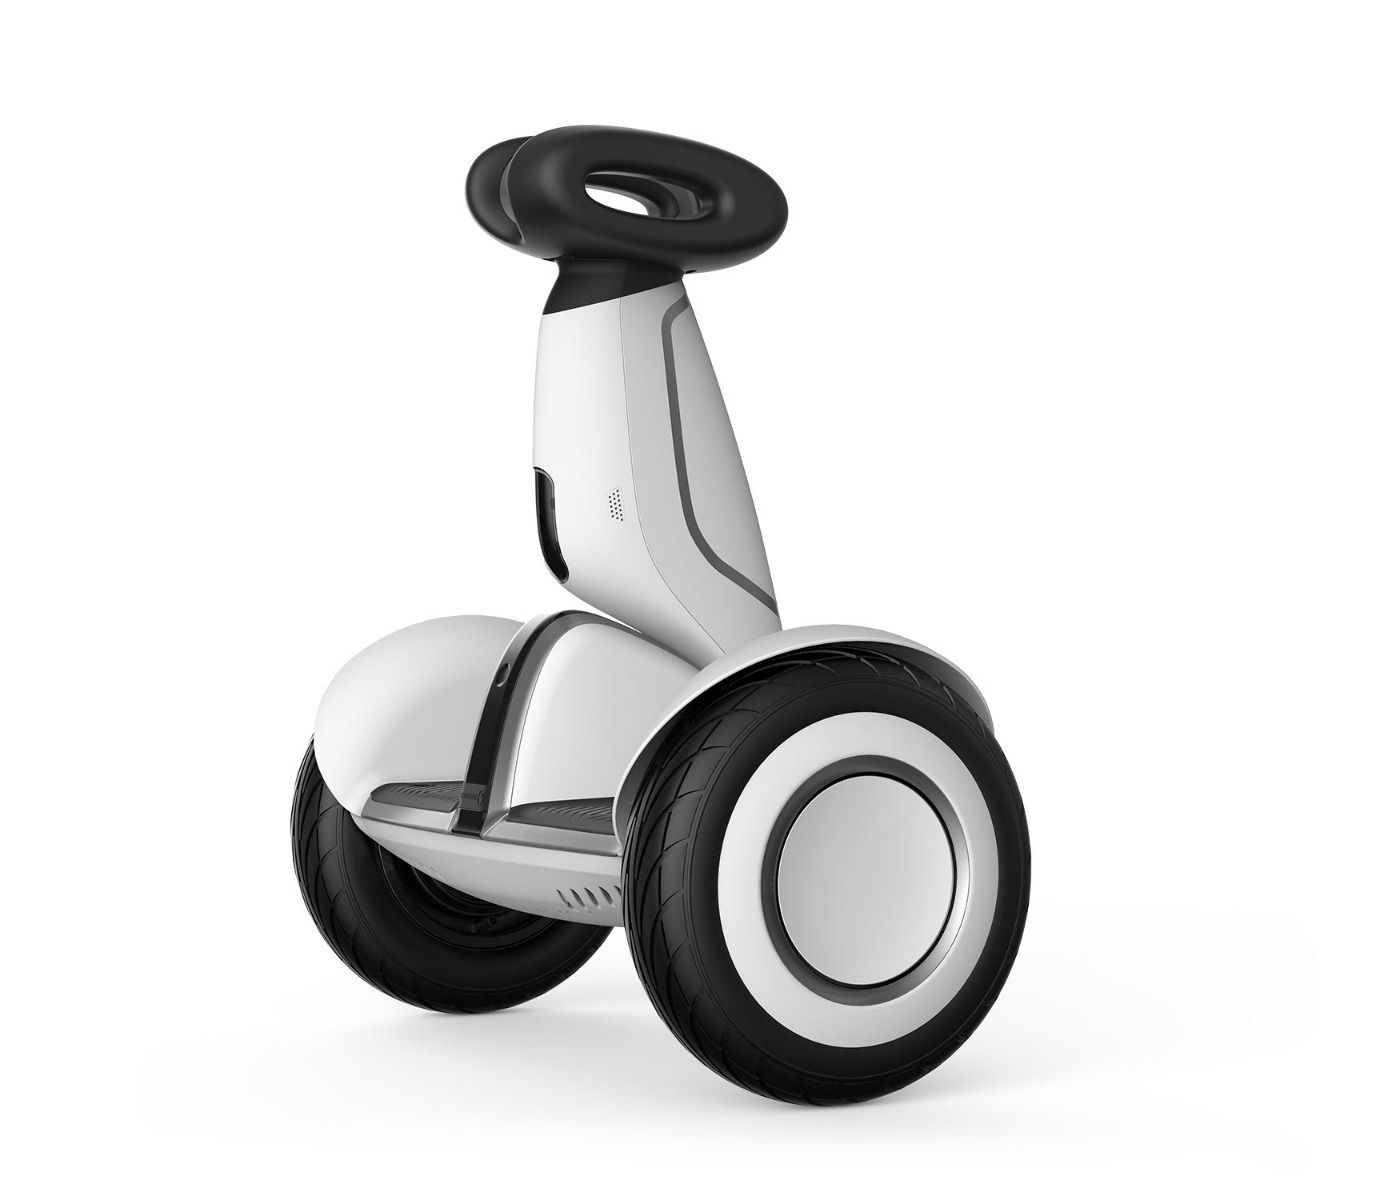 Segway Ninebot S-Plus Smart Electric Scooter-Segway-Electric Self-balancing Scooter-Voltaire Cycles Verona